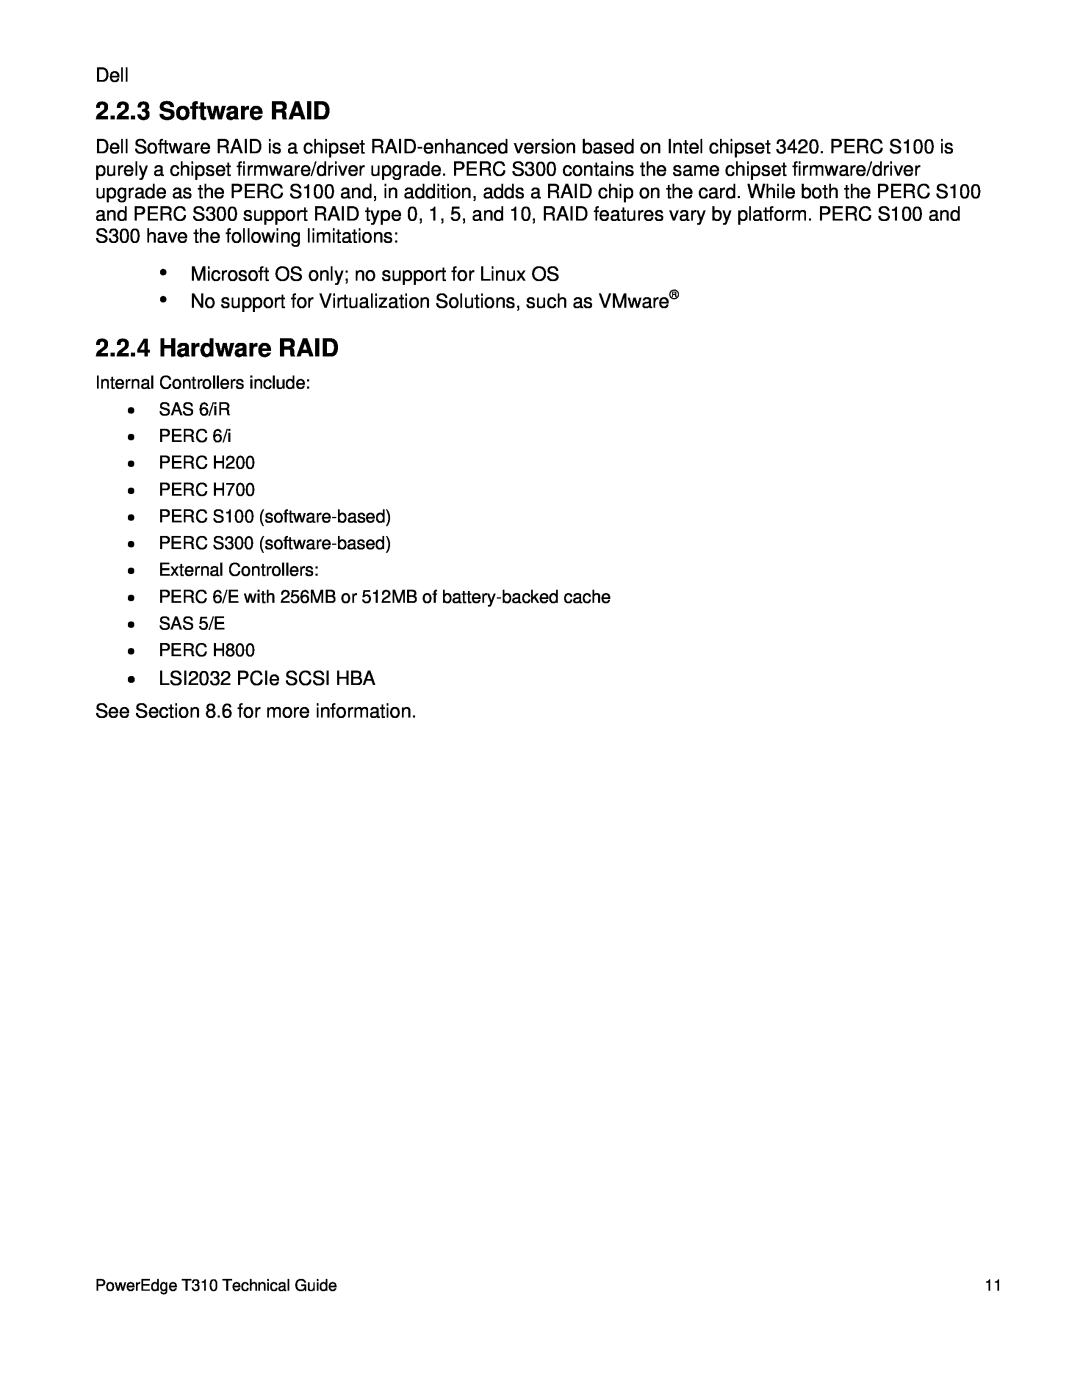 Dell T310 manual Software RAID, Hardware RAID 